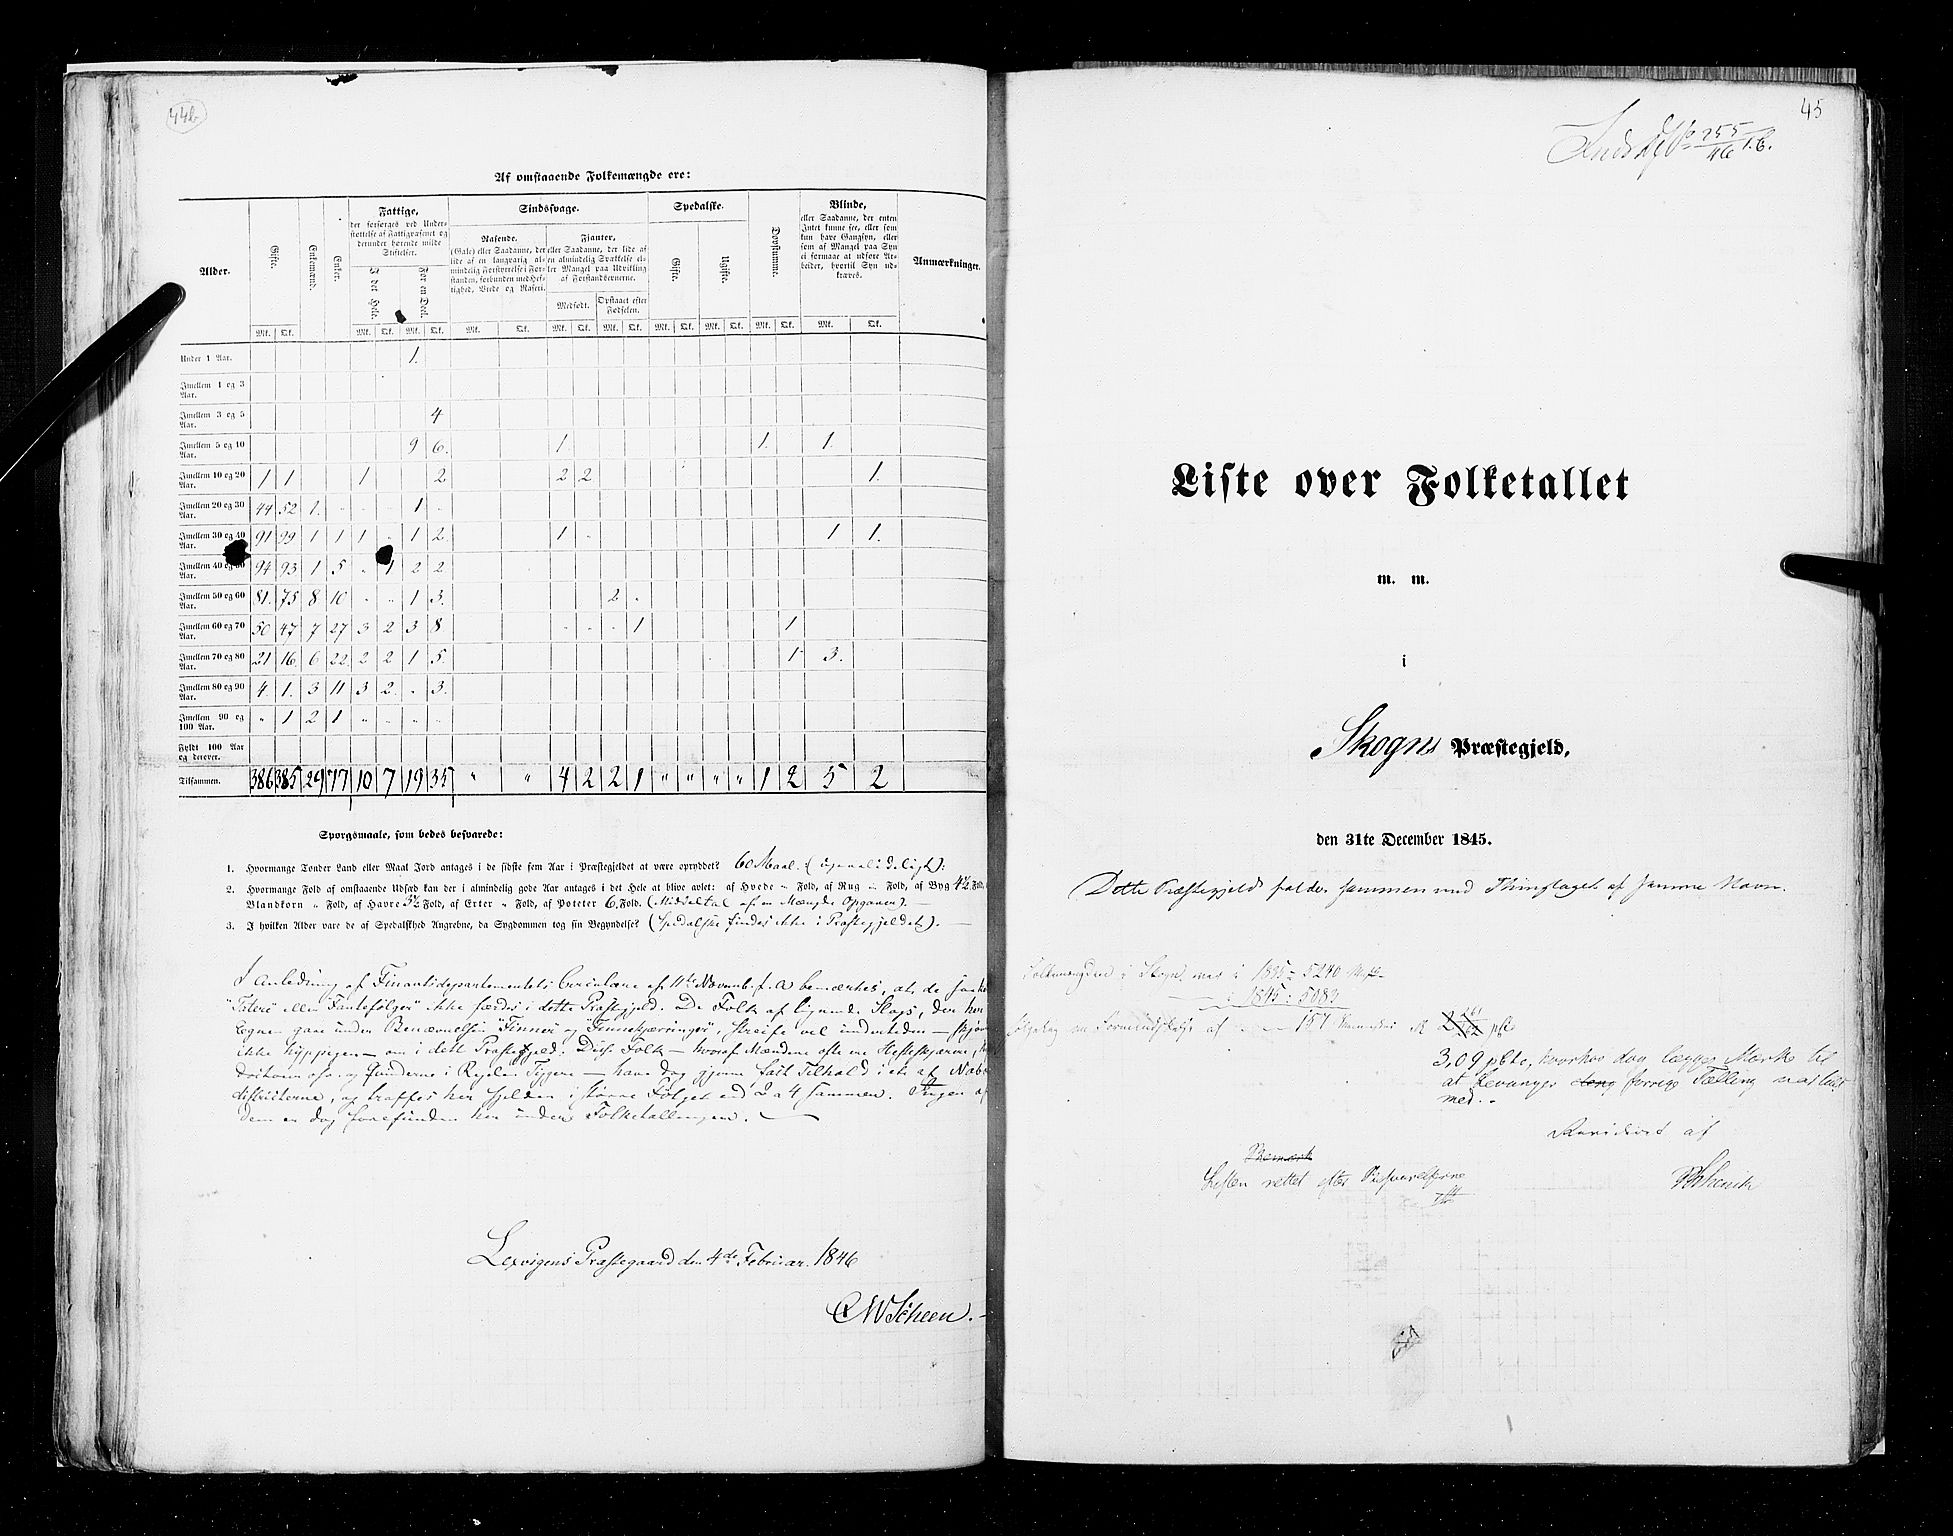 RA, Census 1845, vol. 9A: Nordre Trondhjems amt, 1845, p. 45